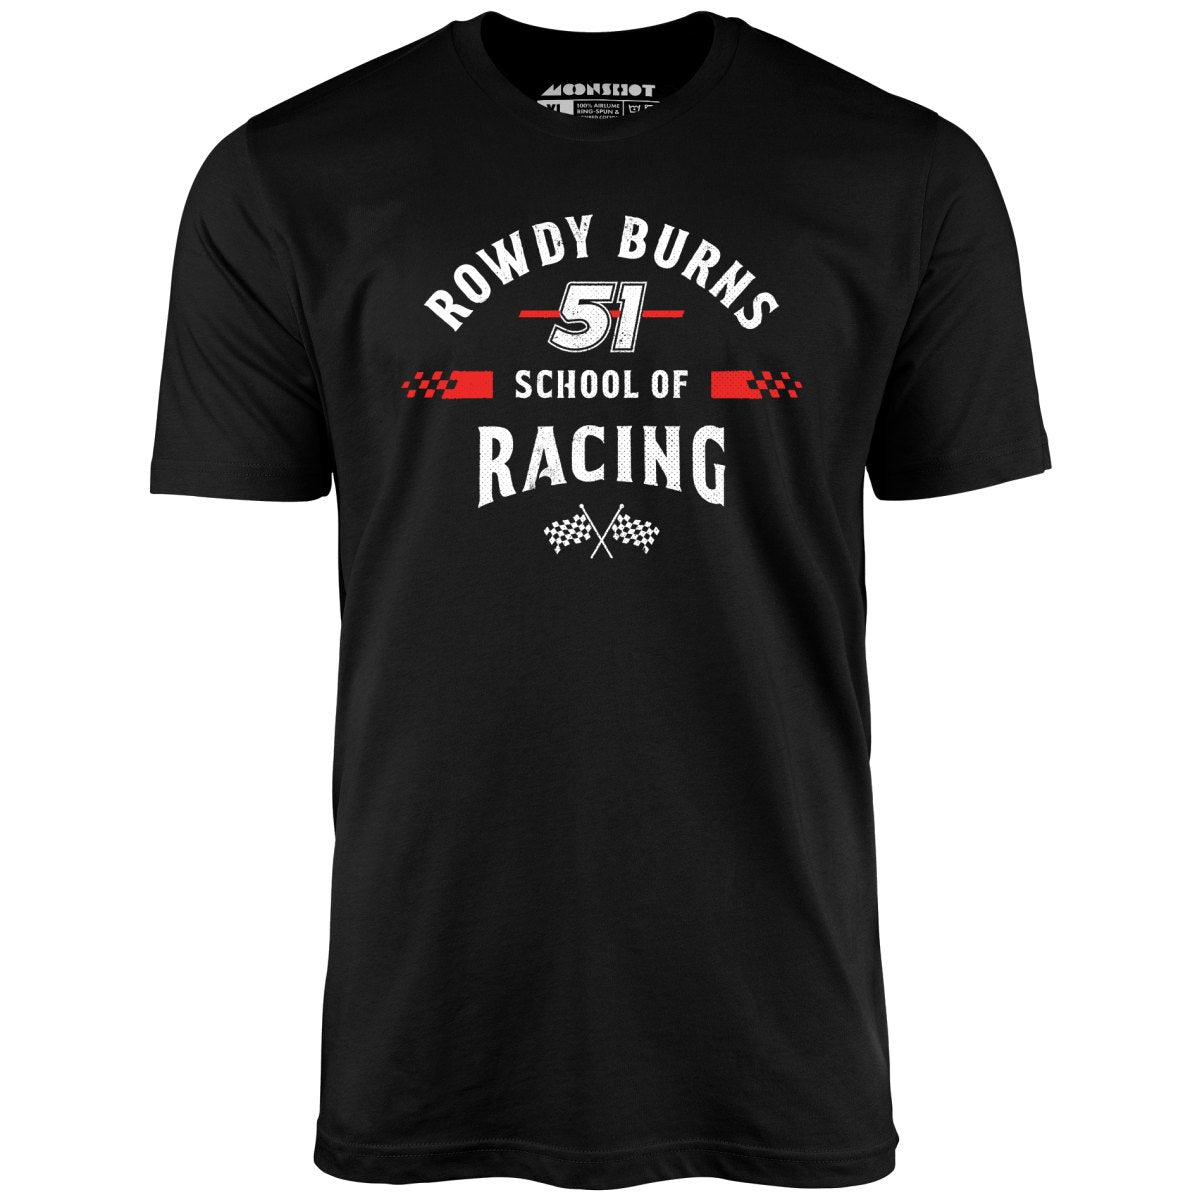 Rowdy Burns School of Racing - Unisex T-Shirt